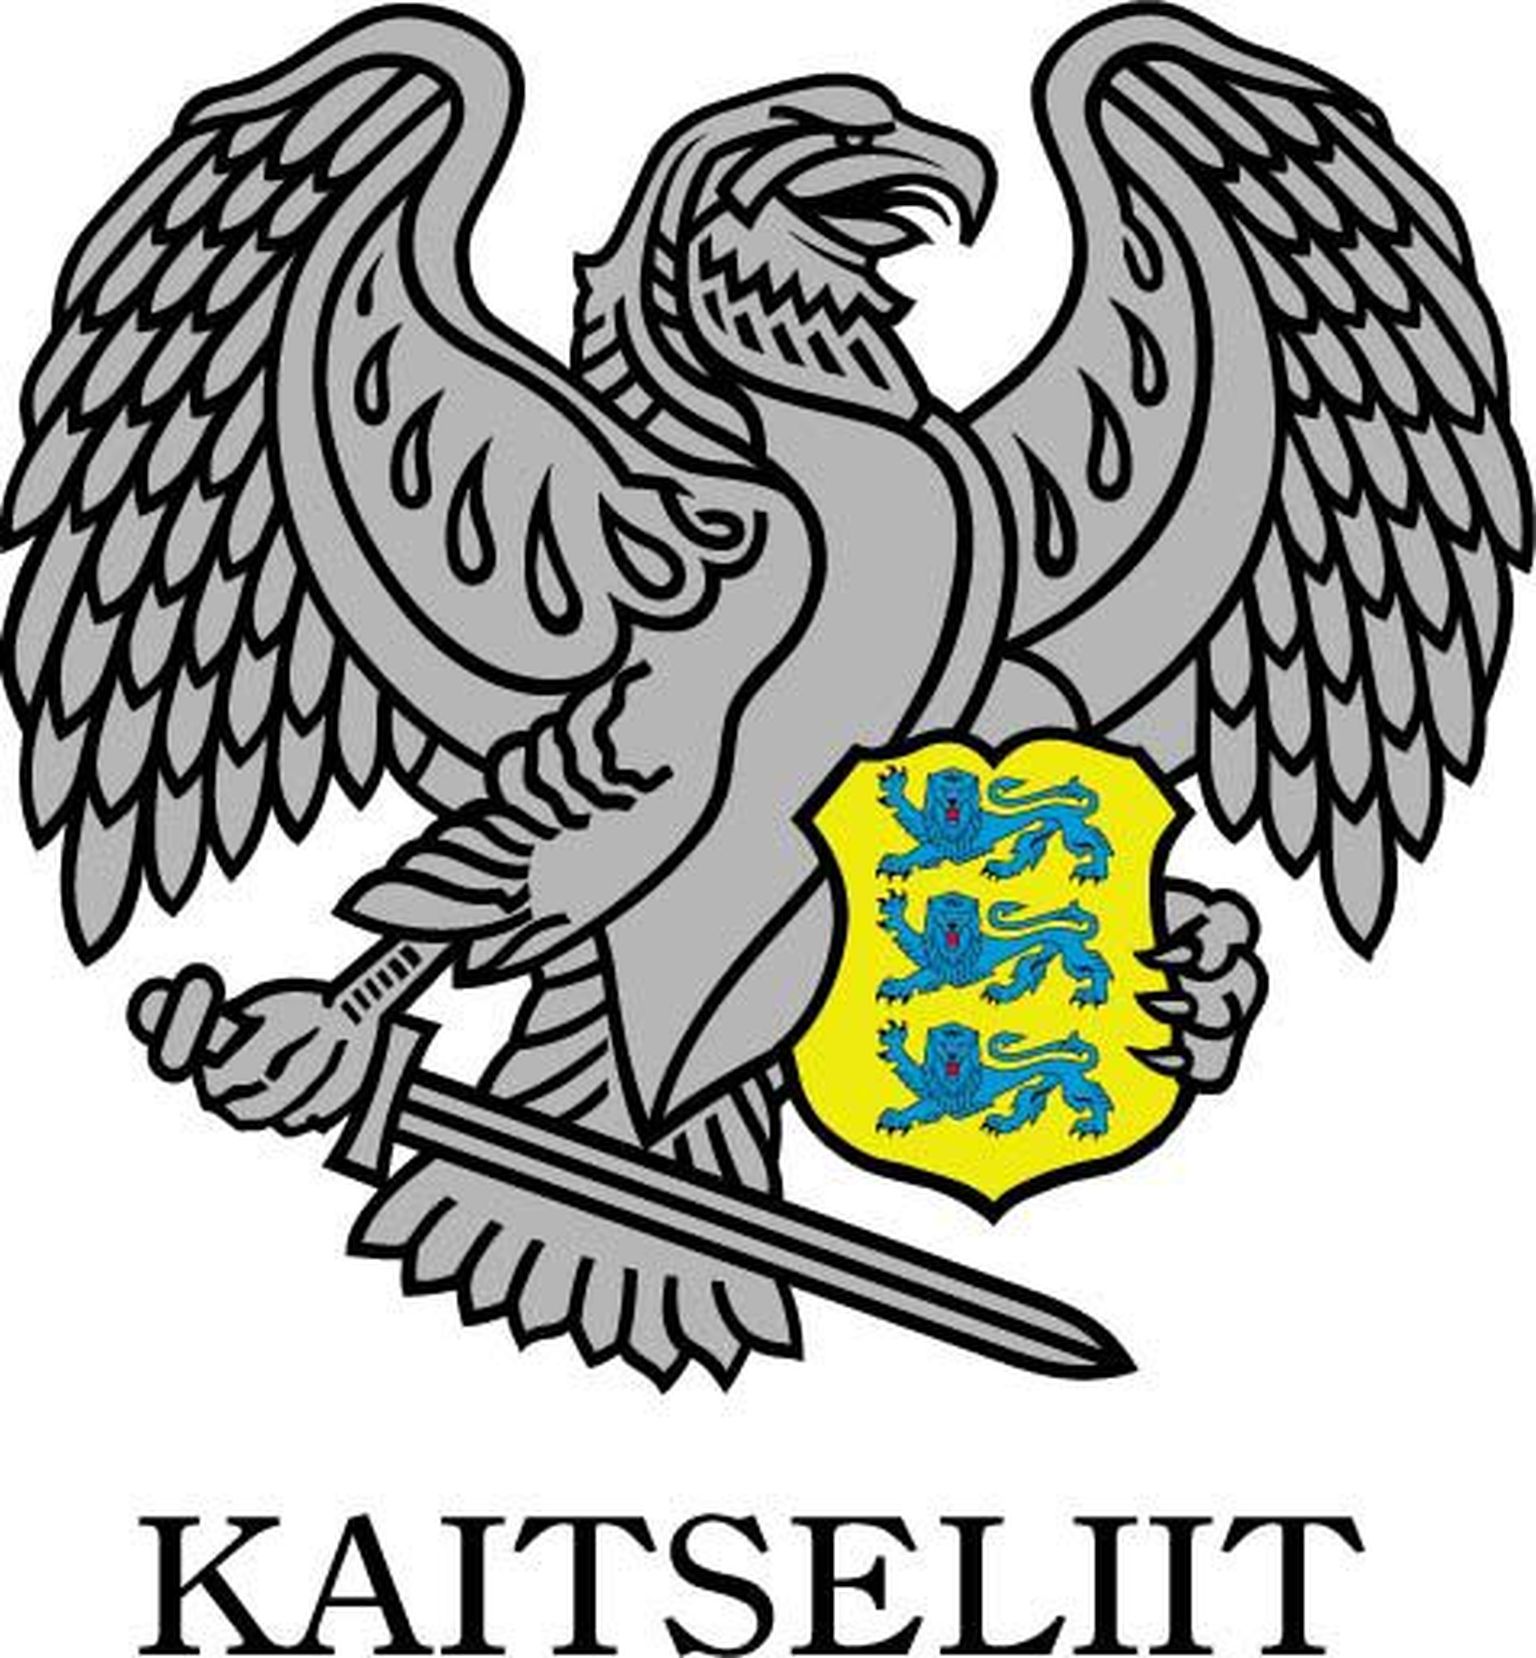 Kaitseliidu logo.